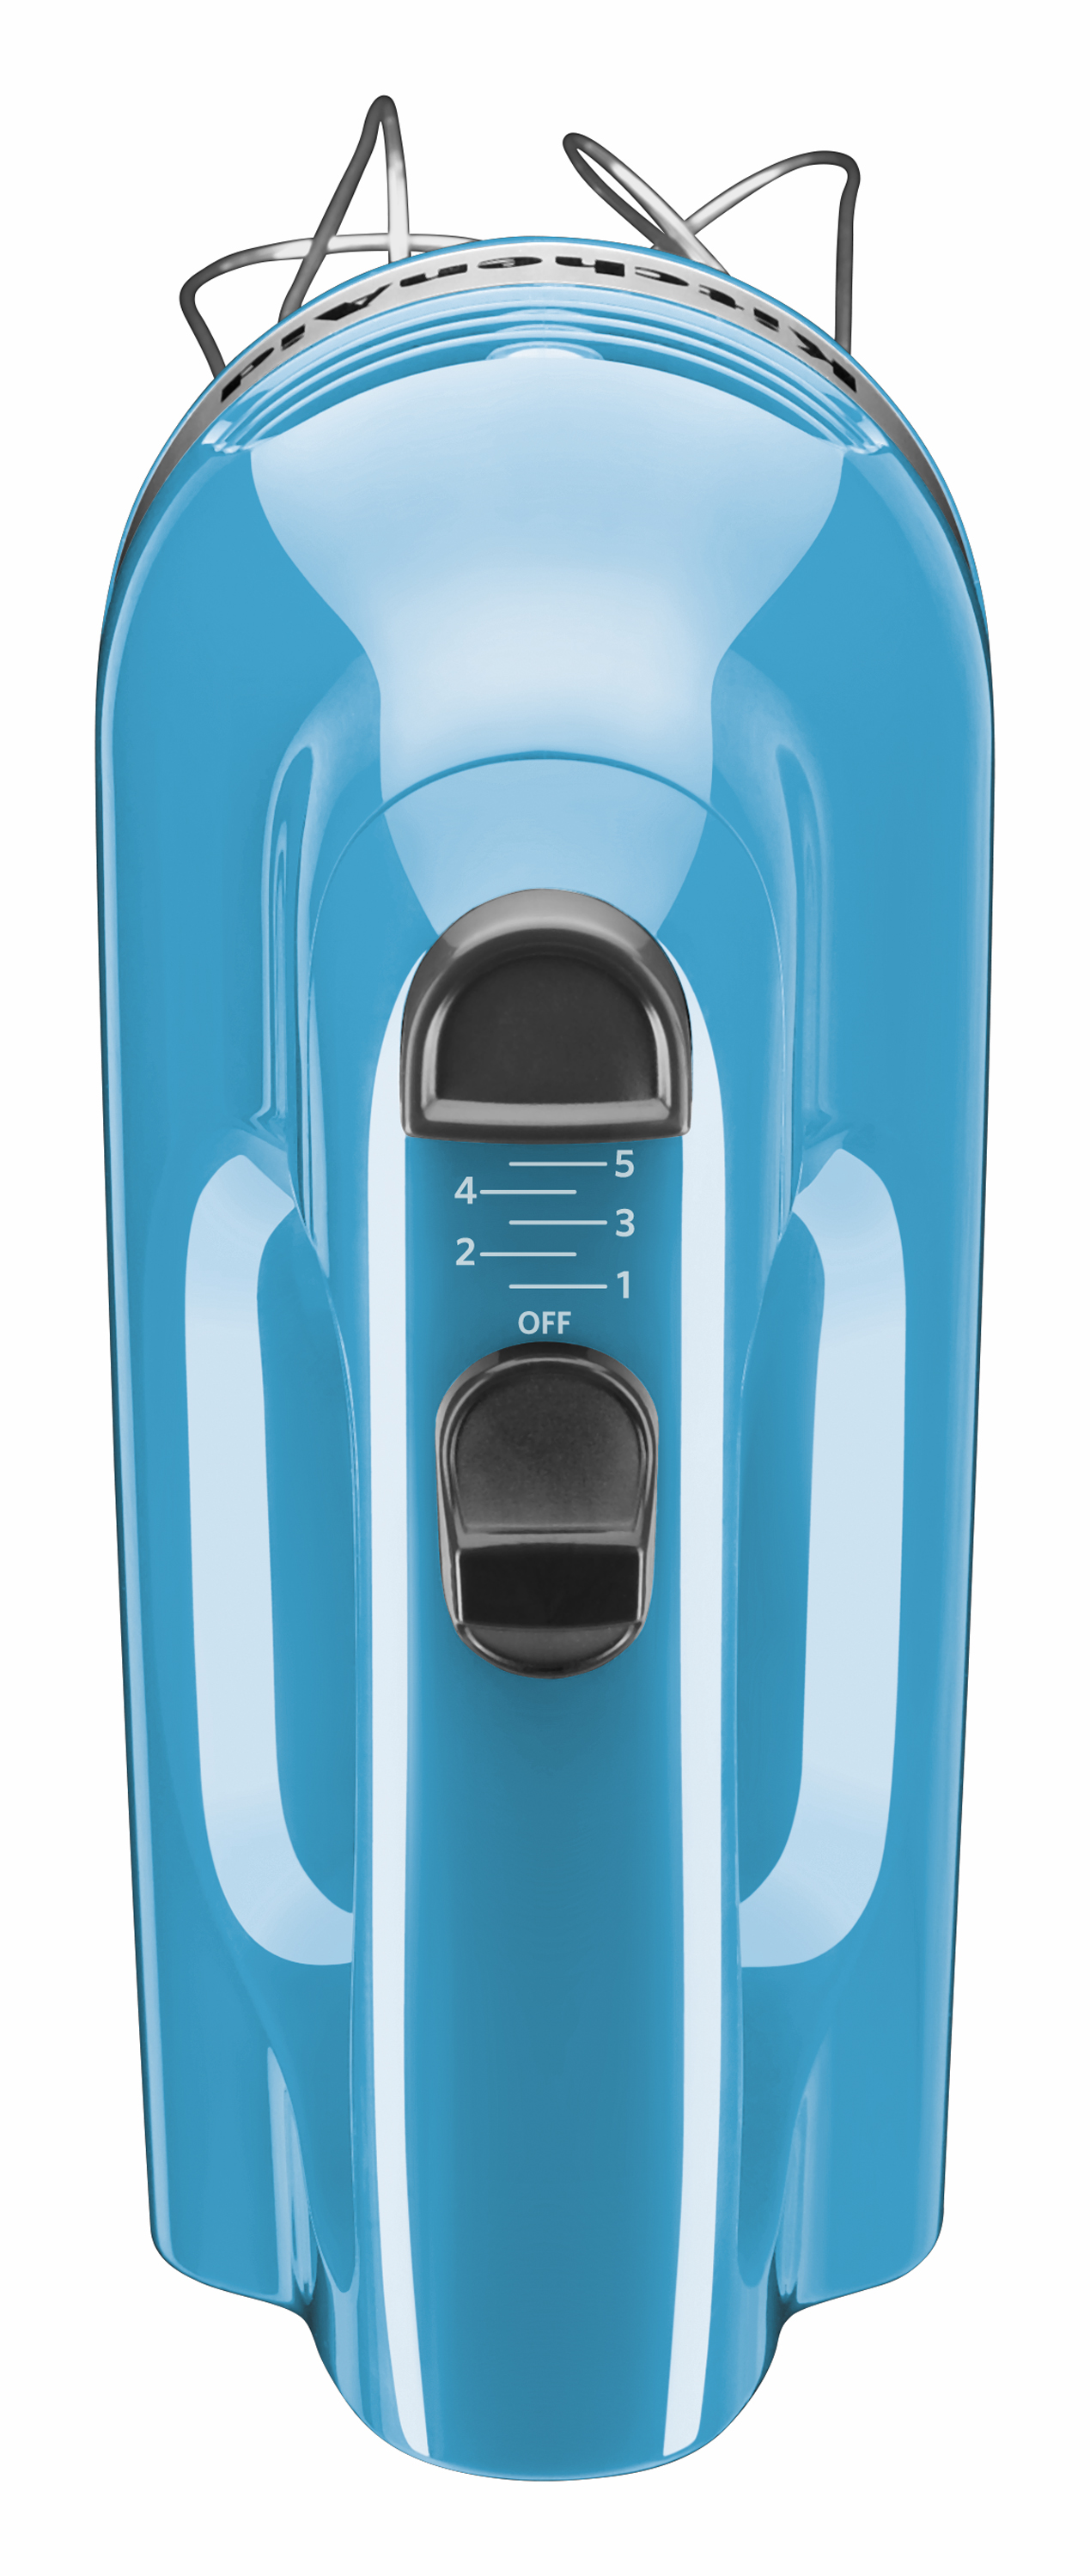 KitchenAid® 5-Speed Ultra Power™ Hand Mixer, Crystal Blue, KHM512 - image 2 of 4